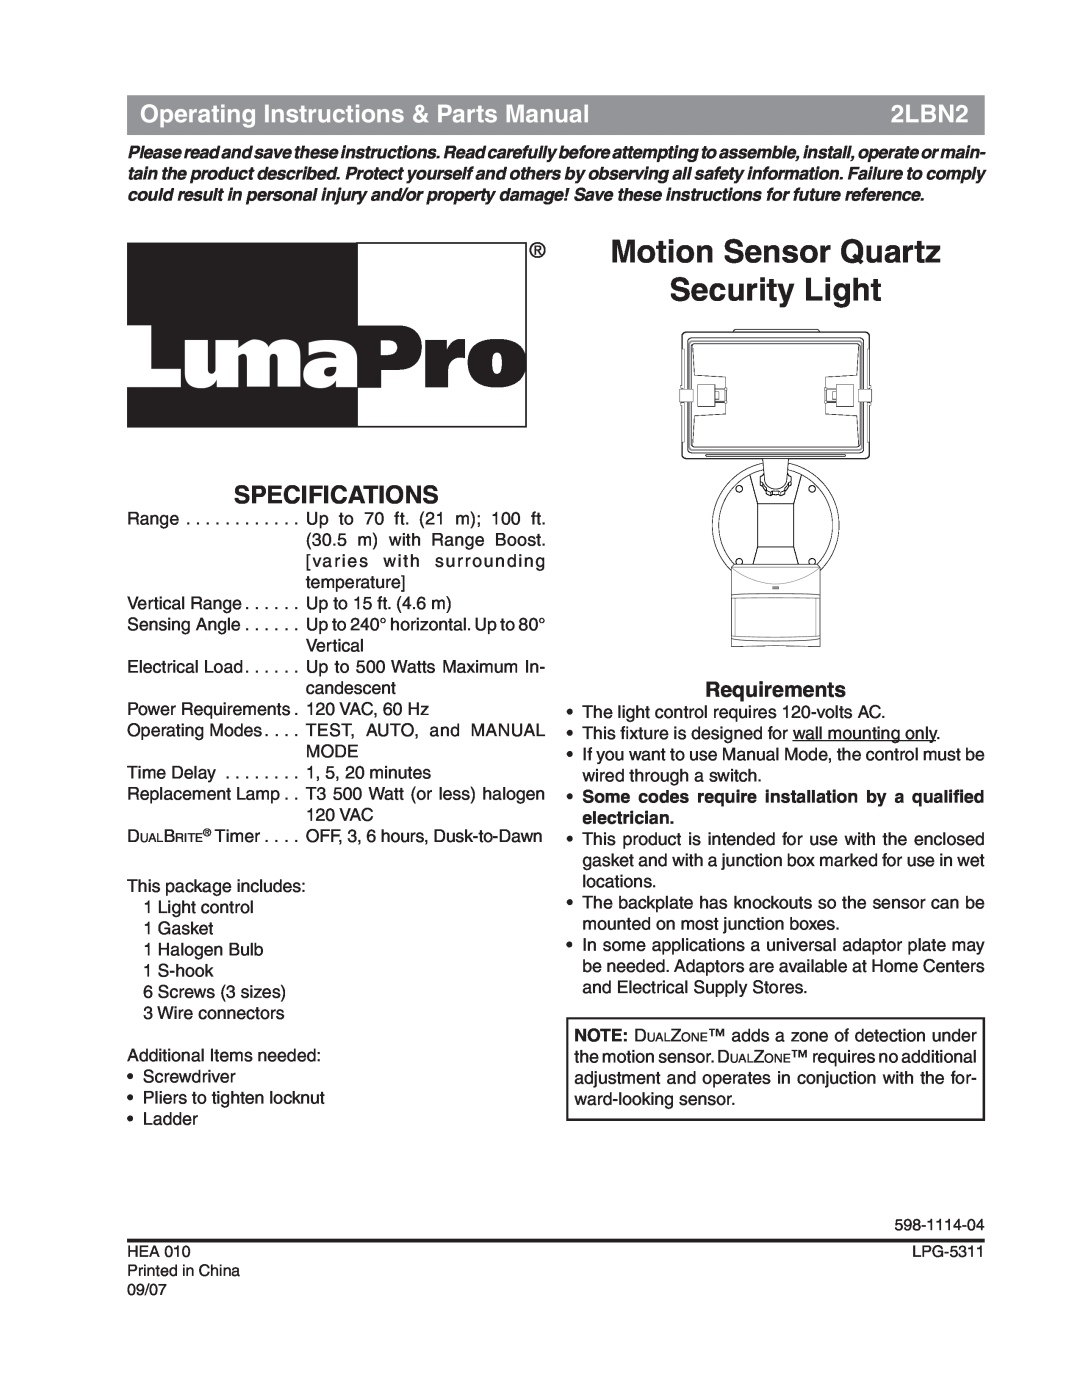 Heath Zenith 2LBN2 specifications Motion Sensor Quartz Security Light, Operating Instructions & Parts Manual, Requirements 